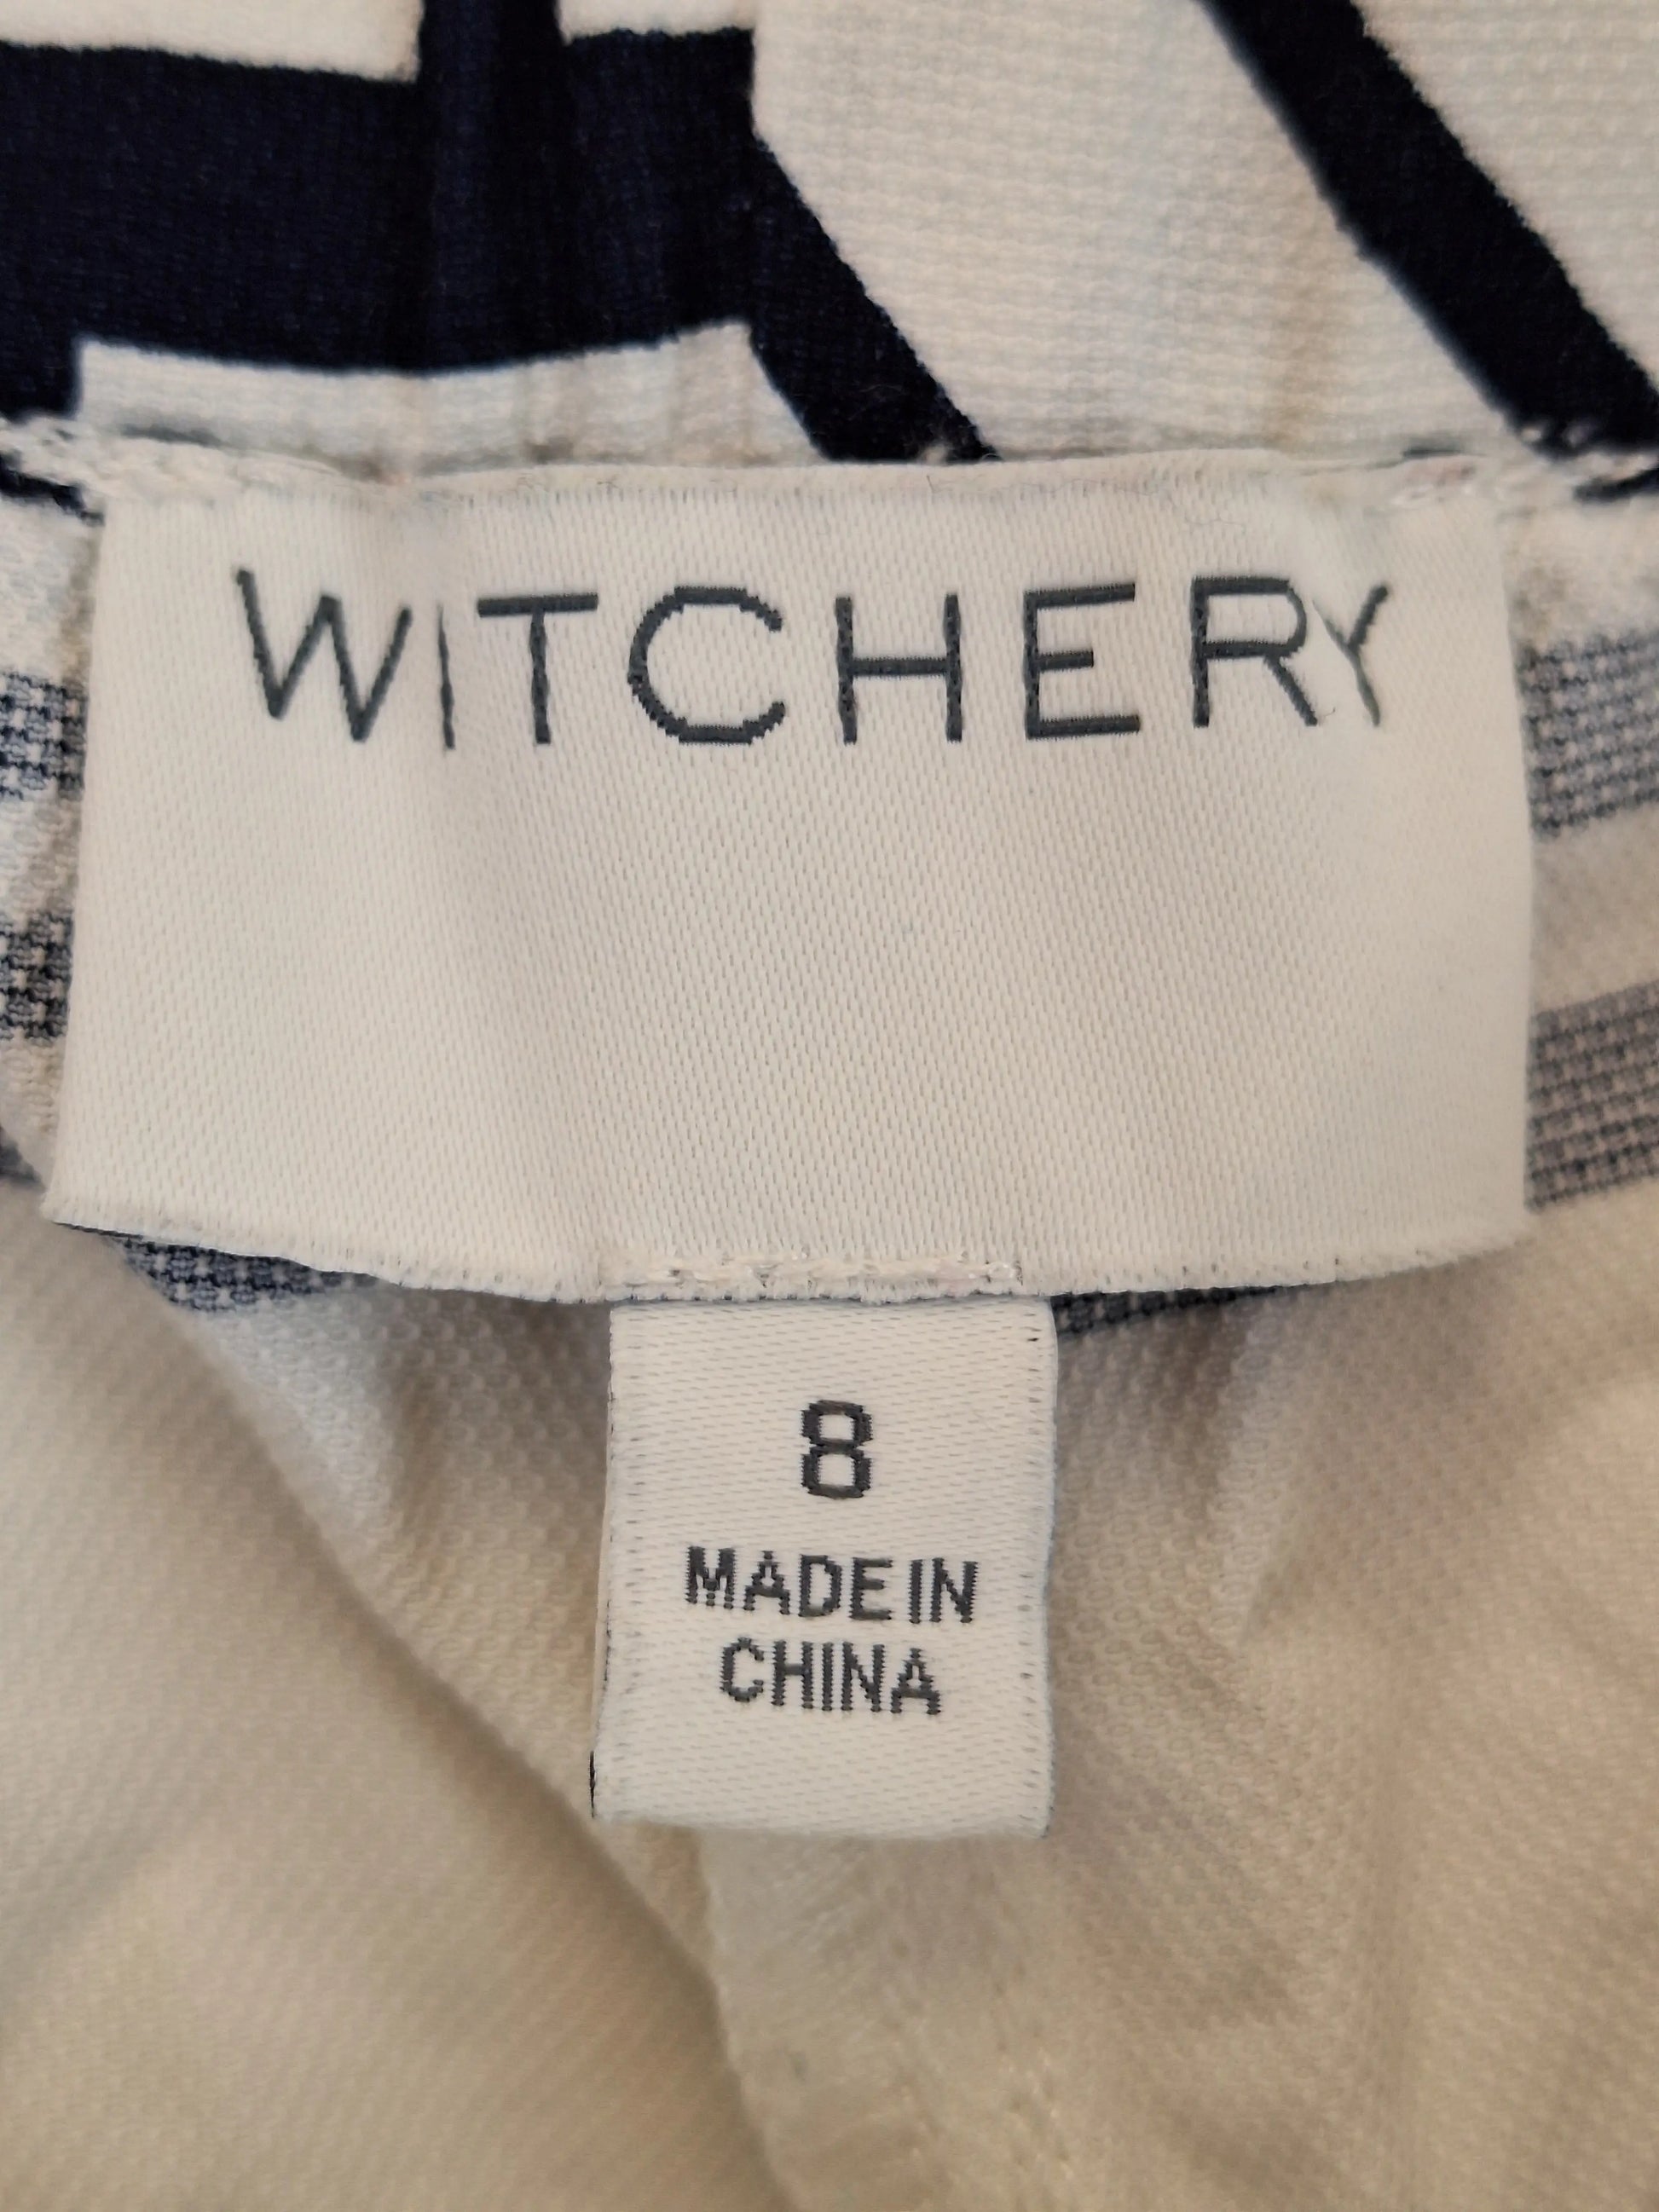 Witchery Essential Tie Waist Summer Shorts Size 8 by SwapUp-Online Second Hand Store-Online Thrift Store